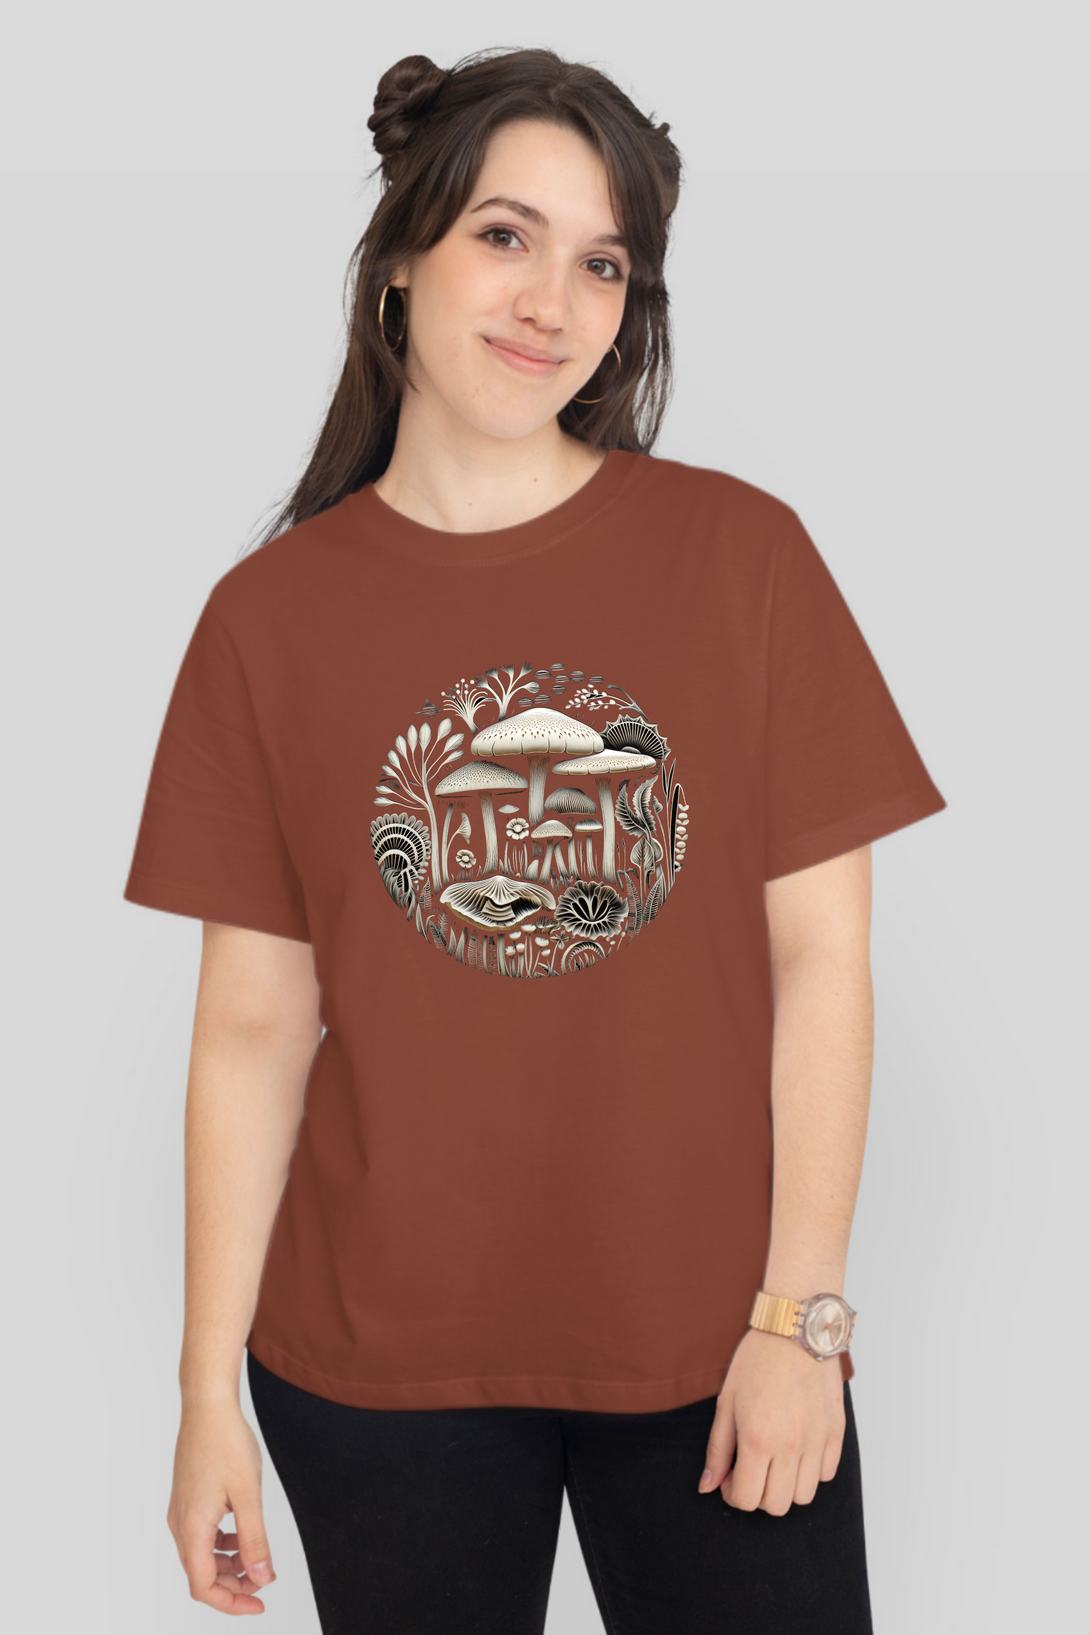 Mushroom Art Printed T-Shirt For Women - WowWaves - 7